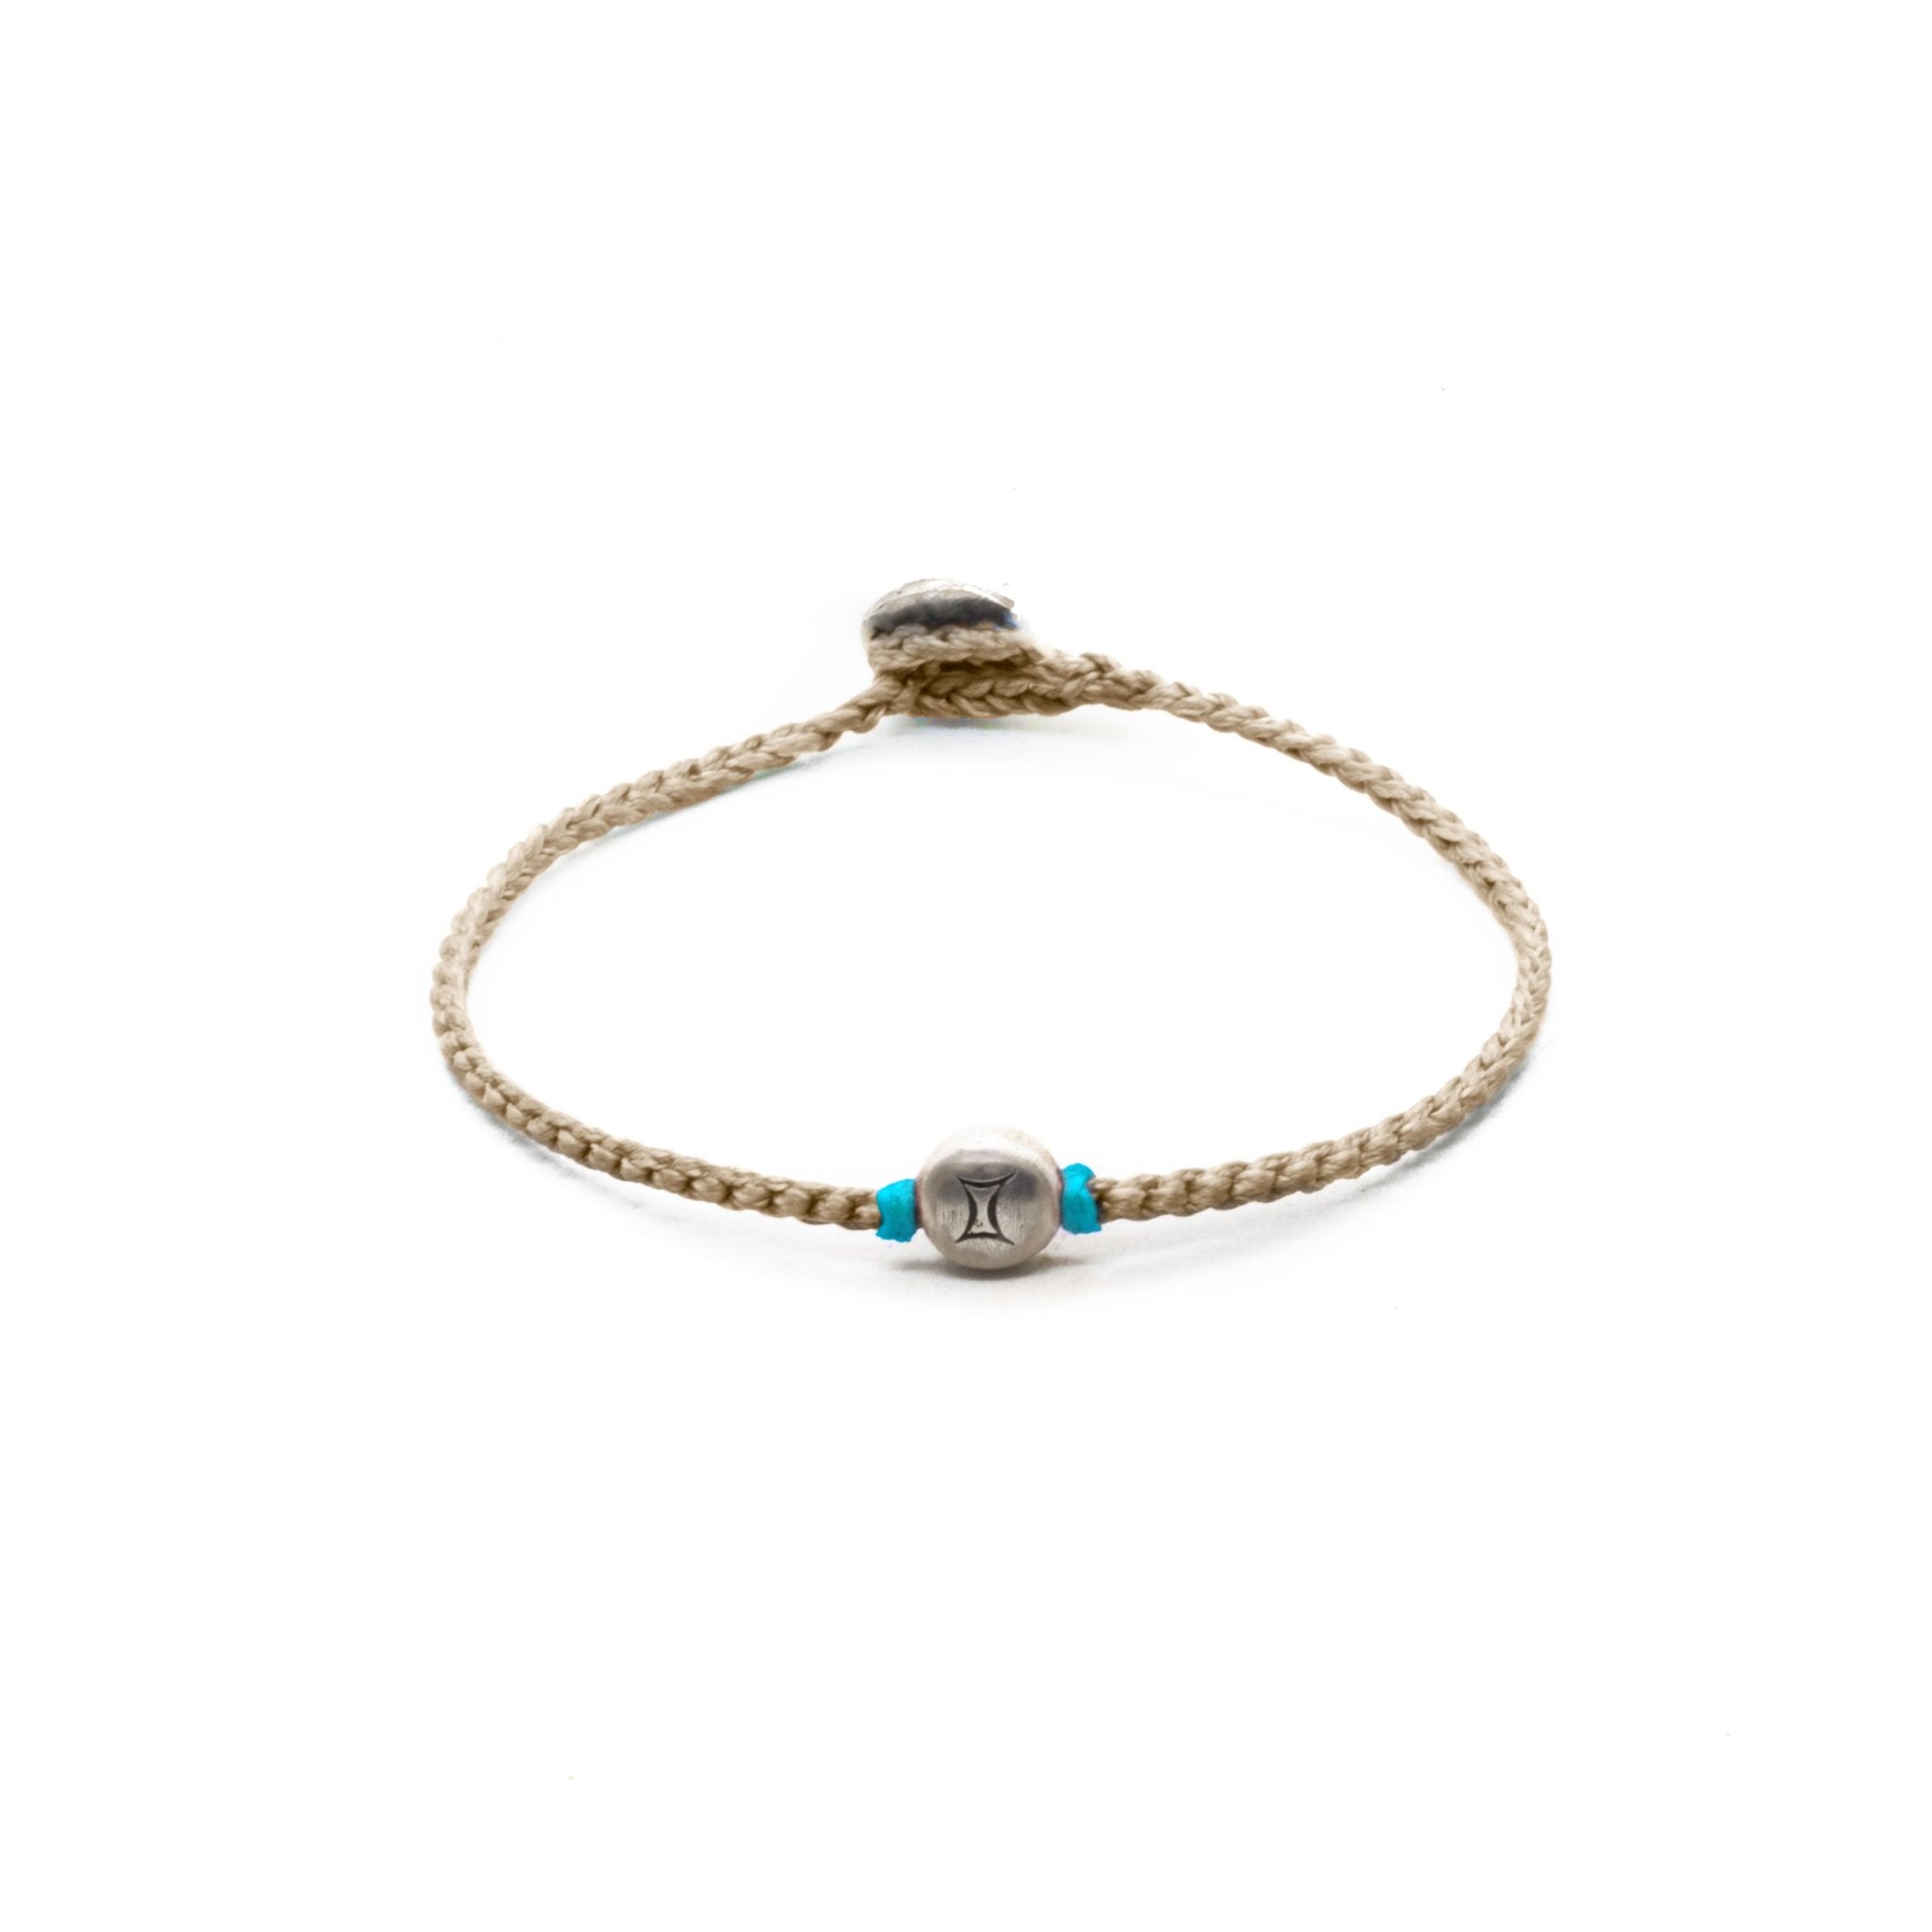 Silver Gemini zodiac sign bracelet with beige hand braided chain.